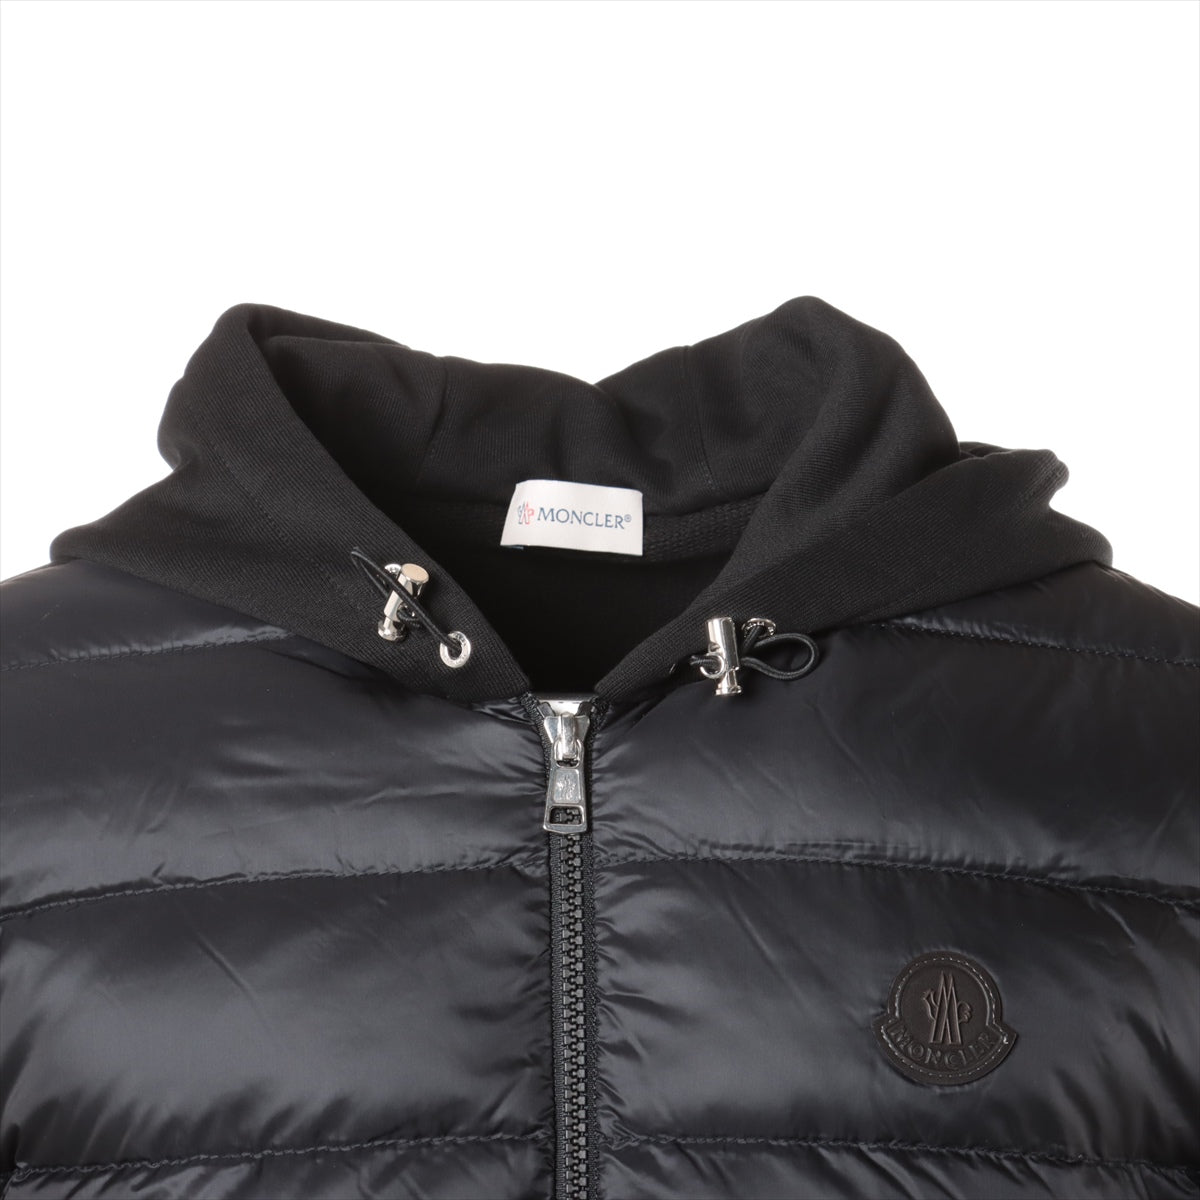 Moncler 23 years Cotton & nylon Cardigan S Men's Black  Switch down zip-up hoodie FELPA APERTA CON CAPPUCCIO